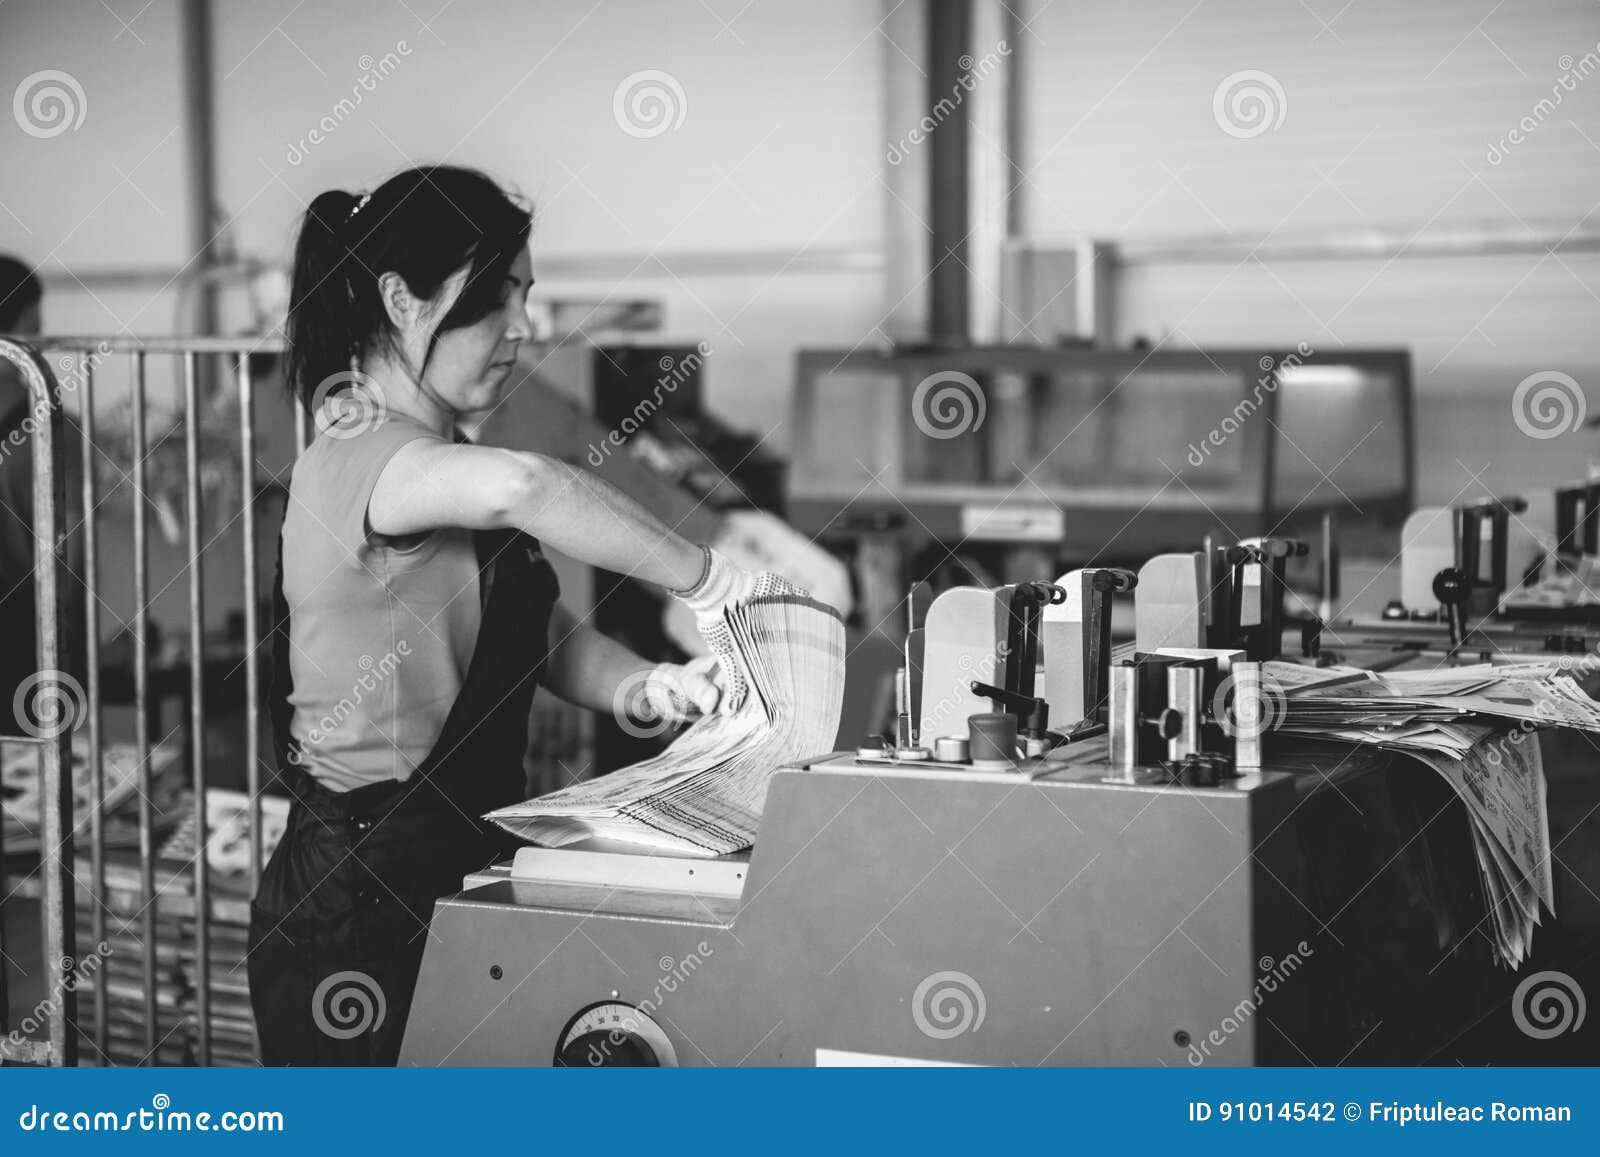 Dirty jobs printing press operator